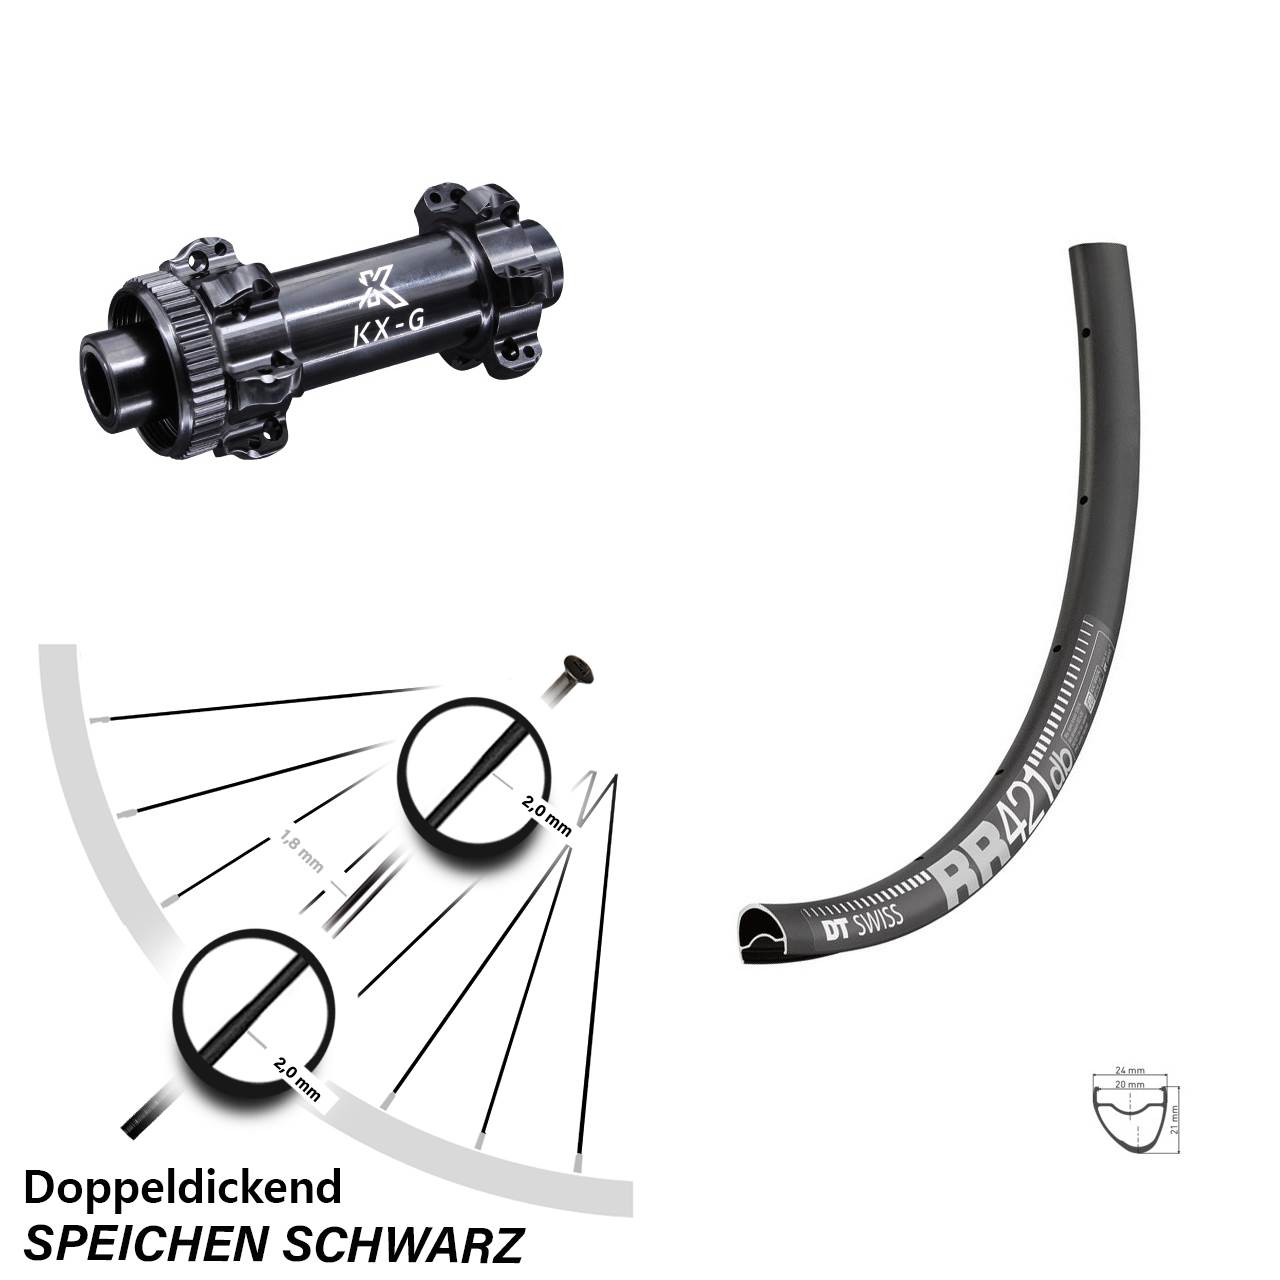 28 Zoll Vorderrad KX-G 12x100 mm Straightpull DT Swiss RR 421 DB Centerlock